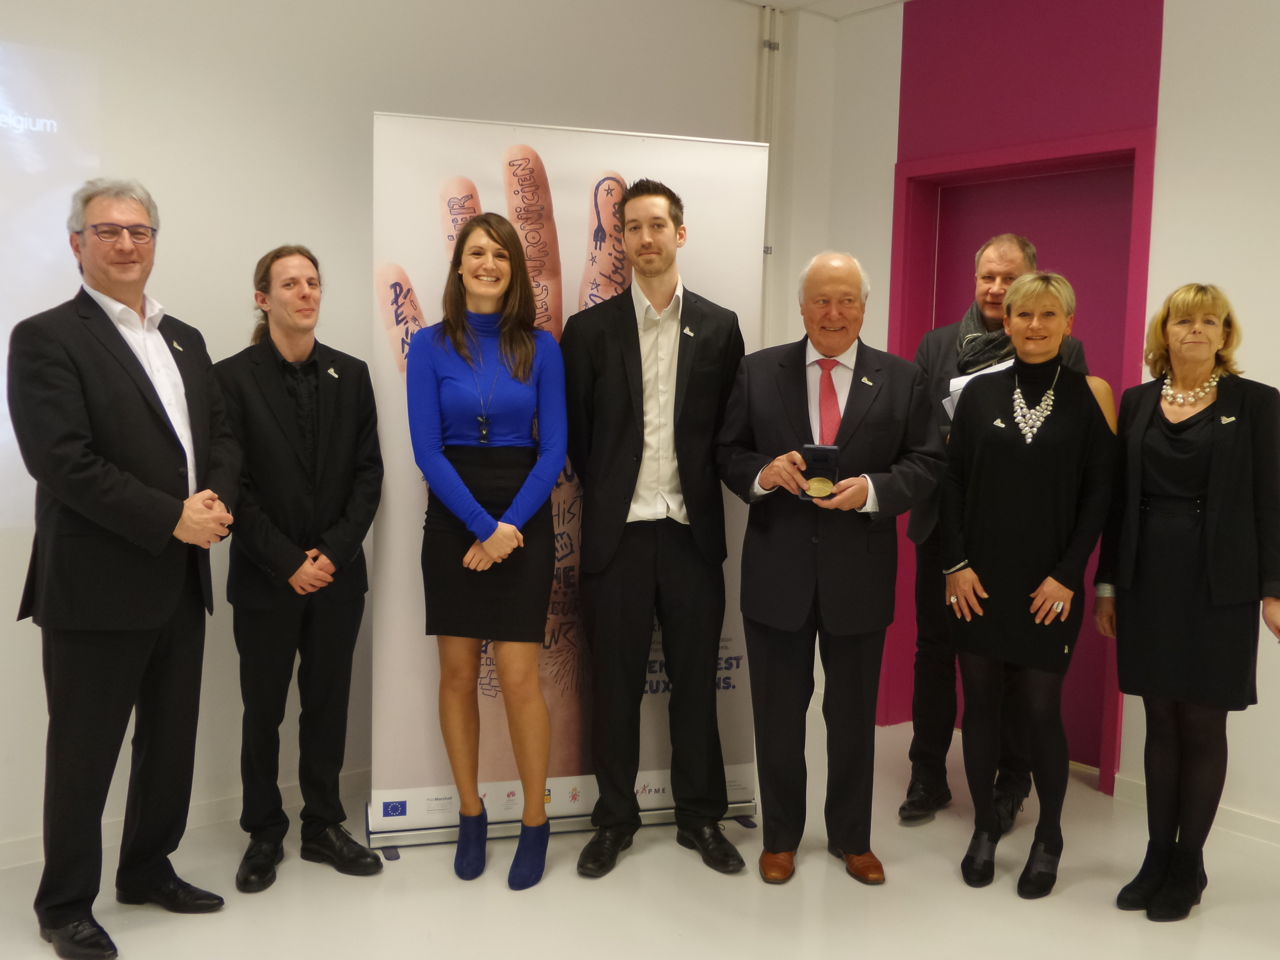 SkillsBelgium is awarded the European Citizen’s prize